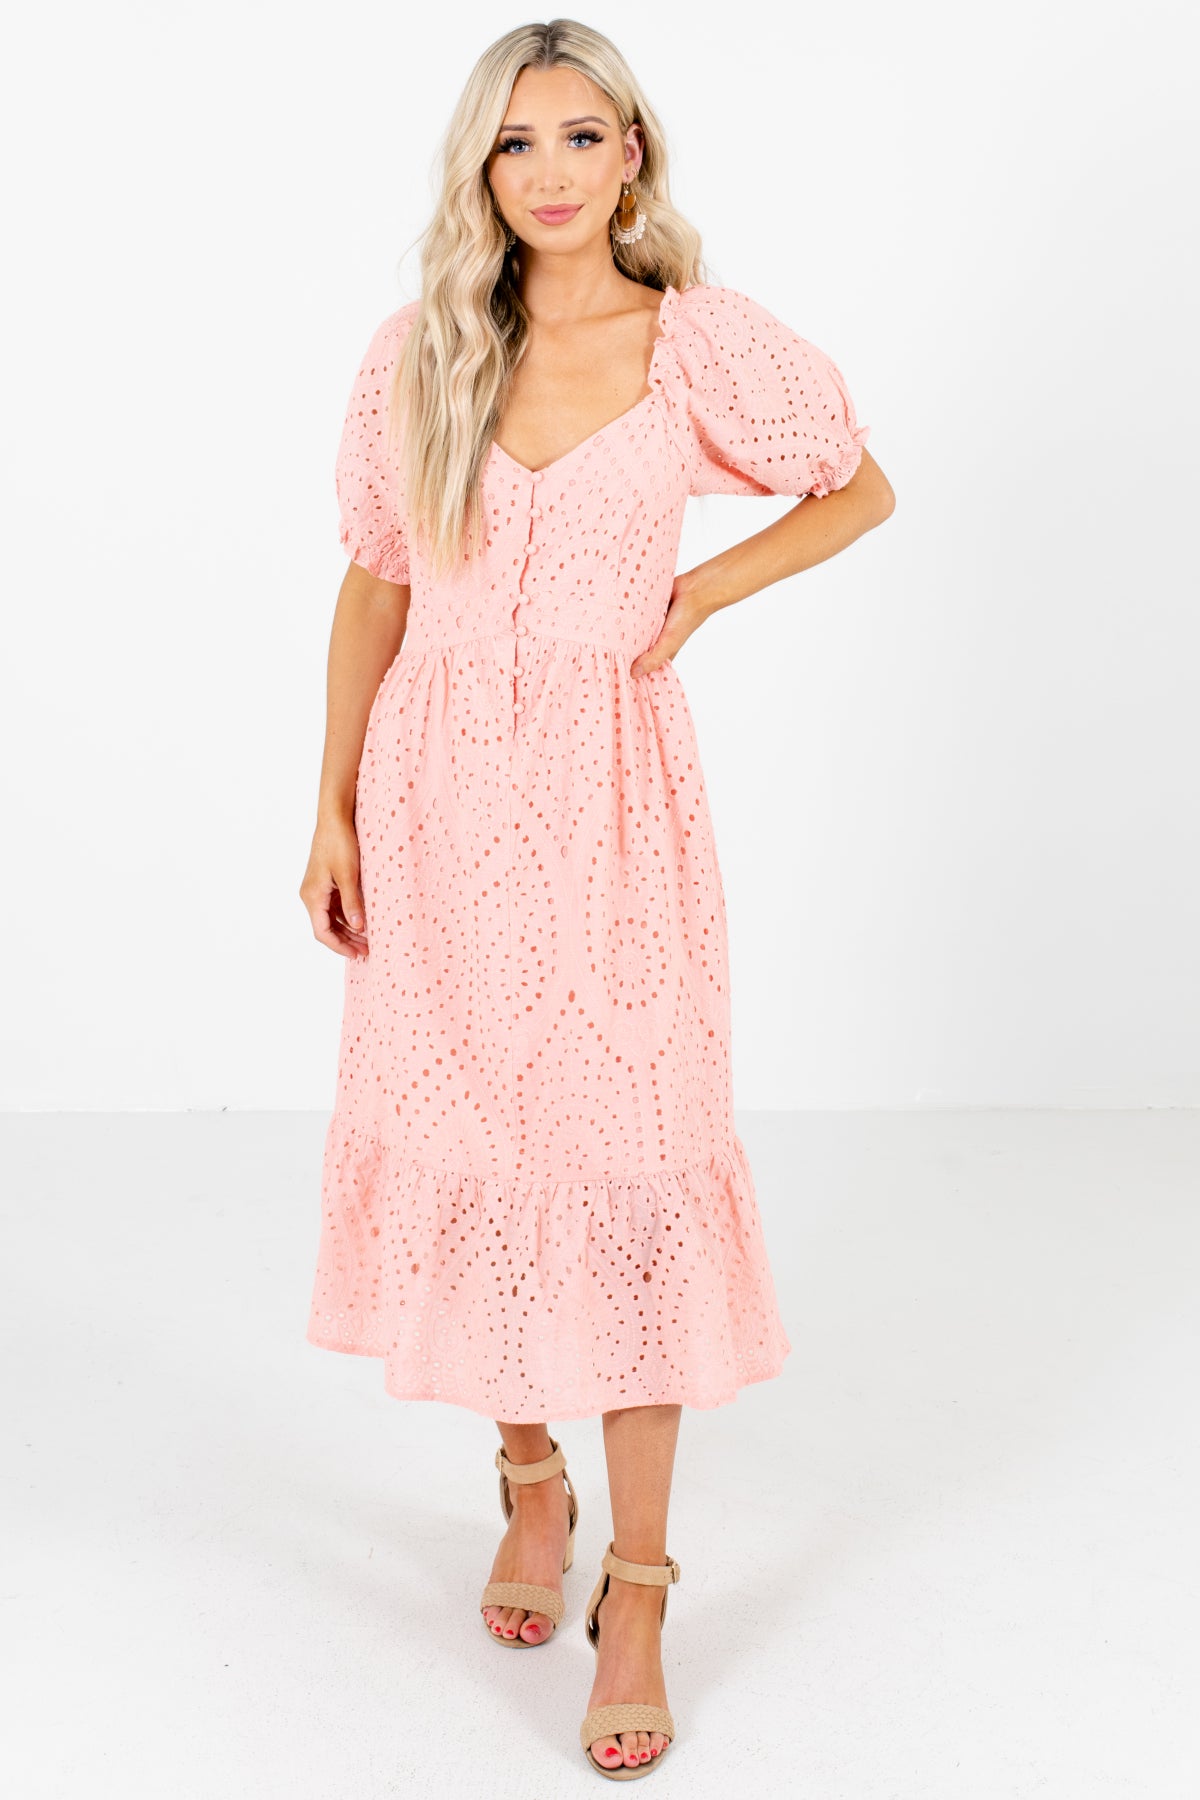 Southern Summer Pink Midi Dress